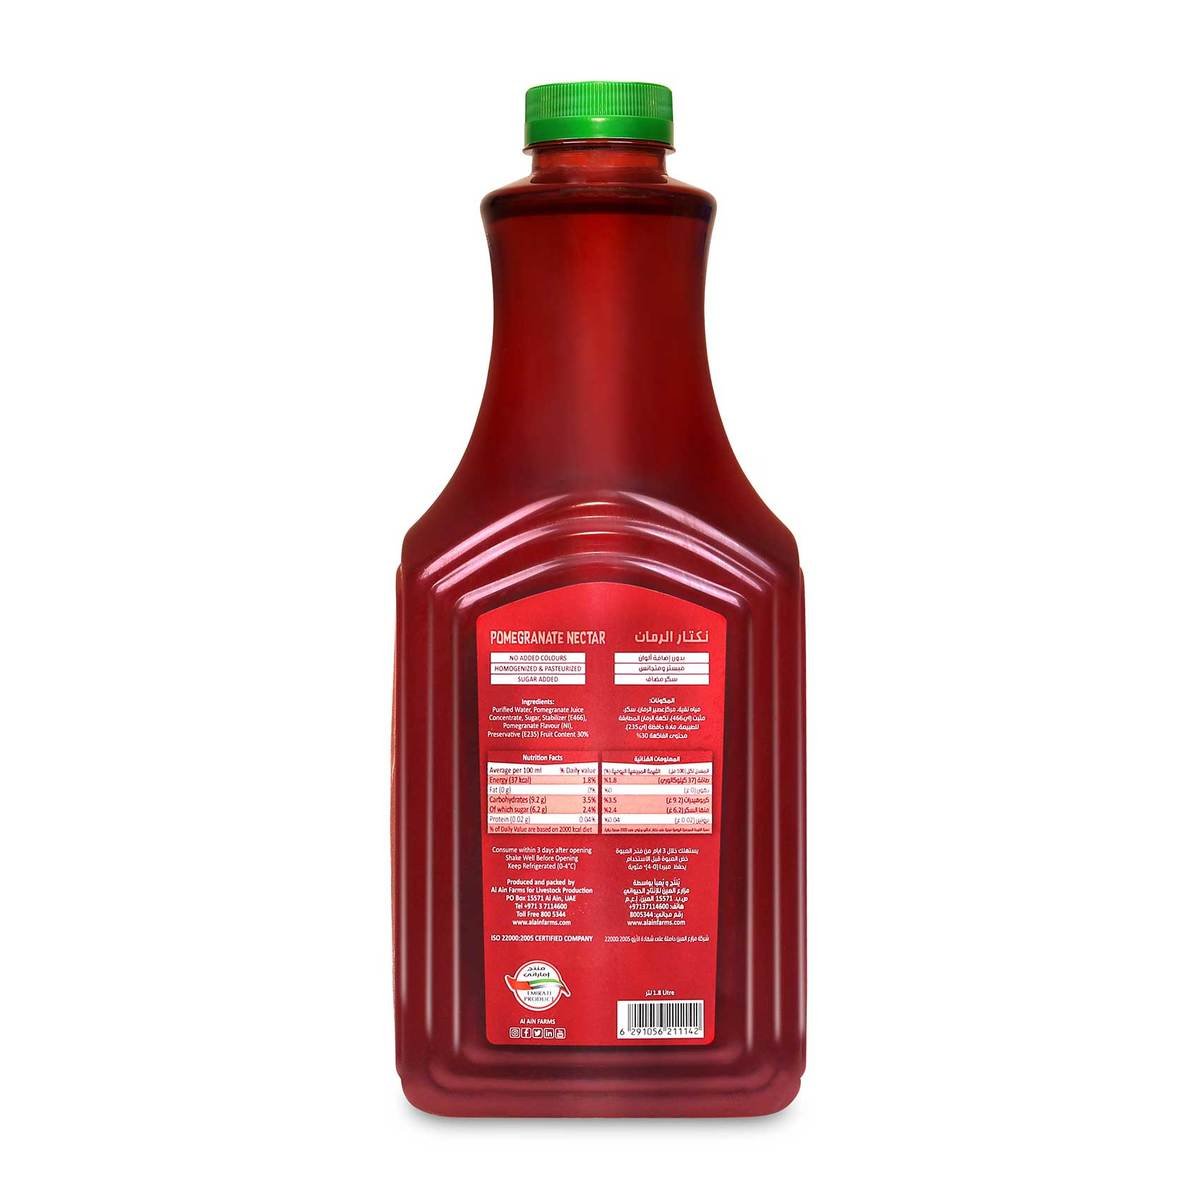 Al Ain Pomegranate Nectar Juice 1.8 Litres